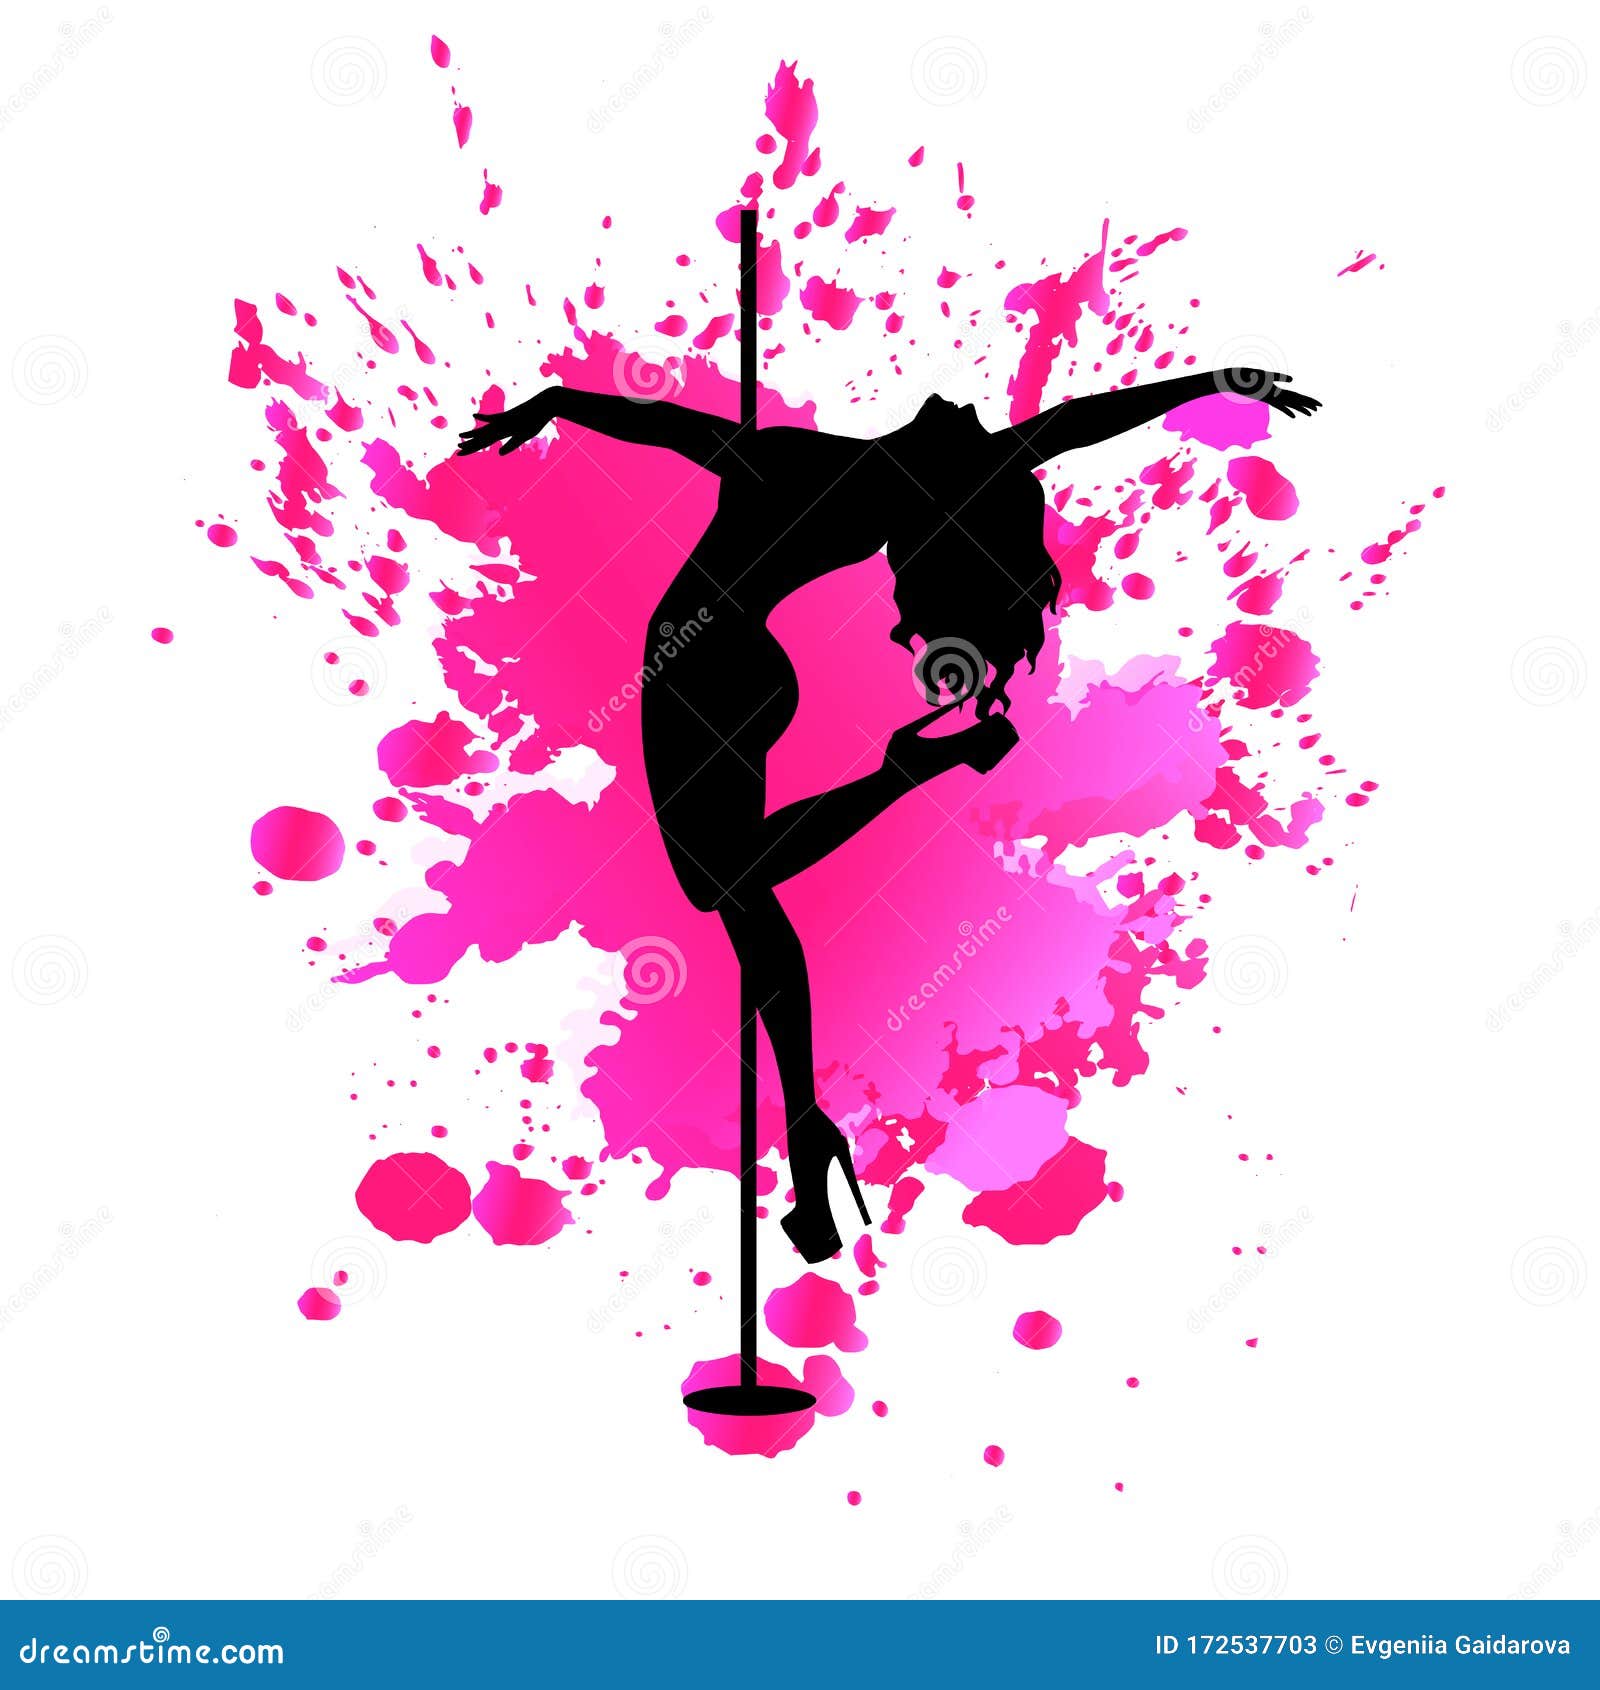 https://thumbs.dreamstime.com/z/silhouette-pole-dance-exotic-pink-blot-vector-black-silhouette-pole-dance-pink-watercolor-blot-white-background-hand-172537703.jpg